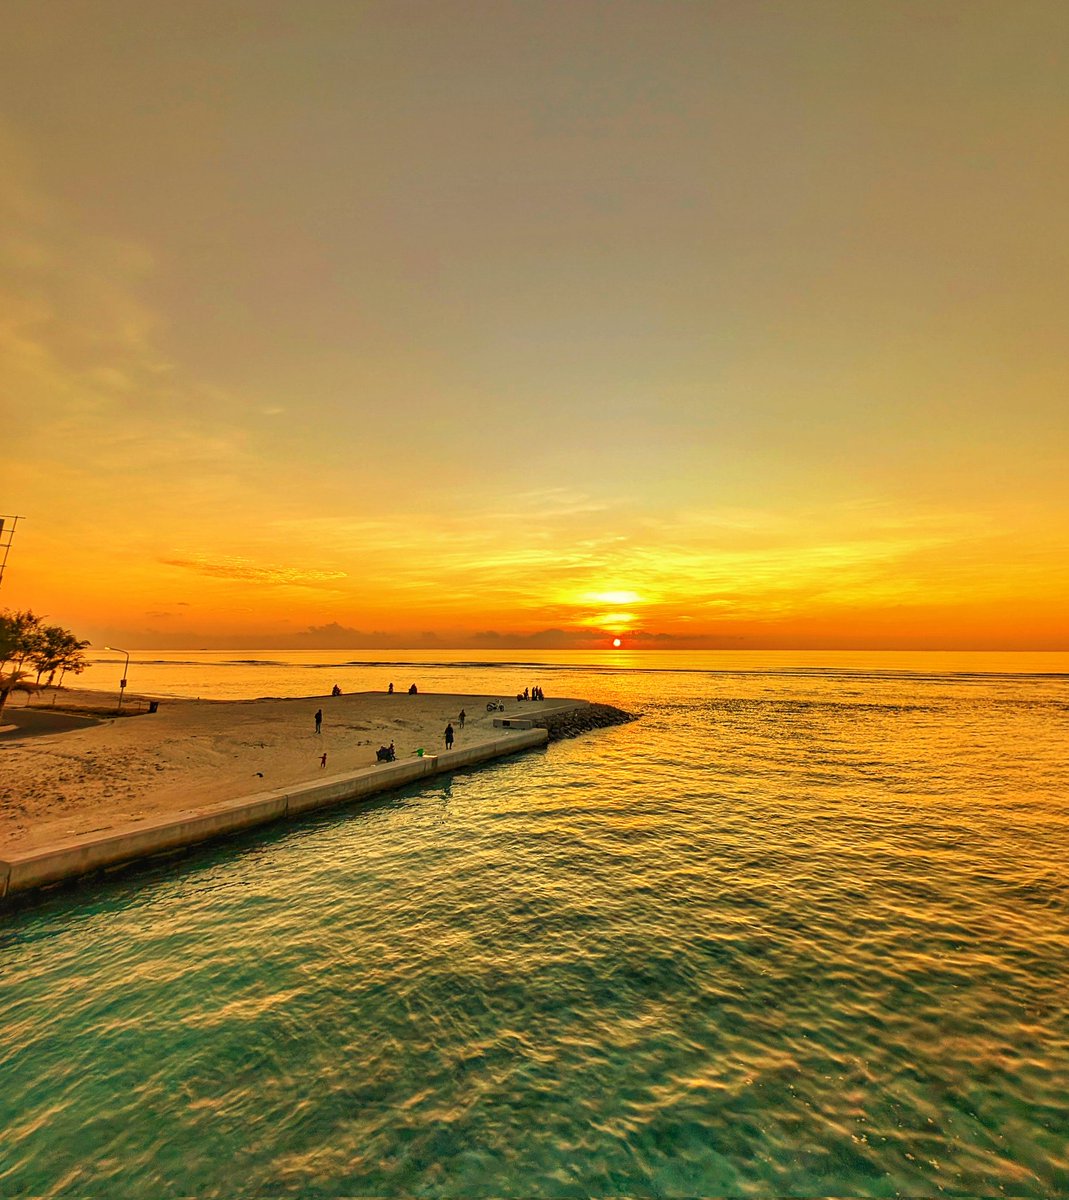 Sunrise @ Hulhumalè Canal Bridge 

#Maldives #visitMaldives #sunset #sunrise #goldenhour #island #photography #travel #Google #TeamPixel #Pixel8Pro